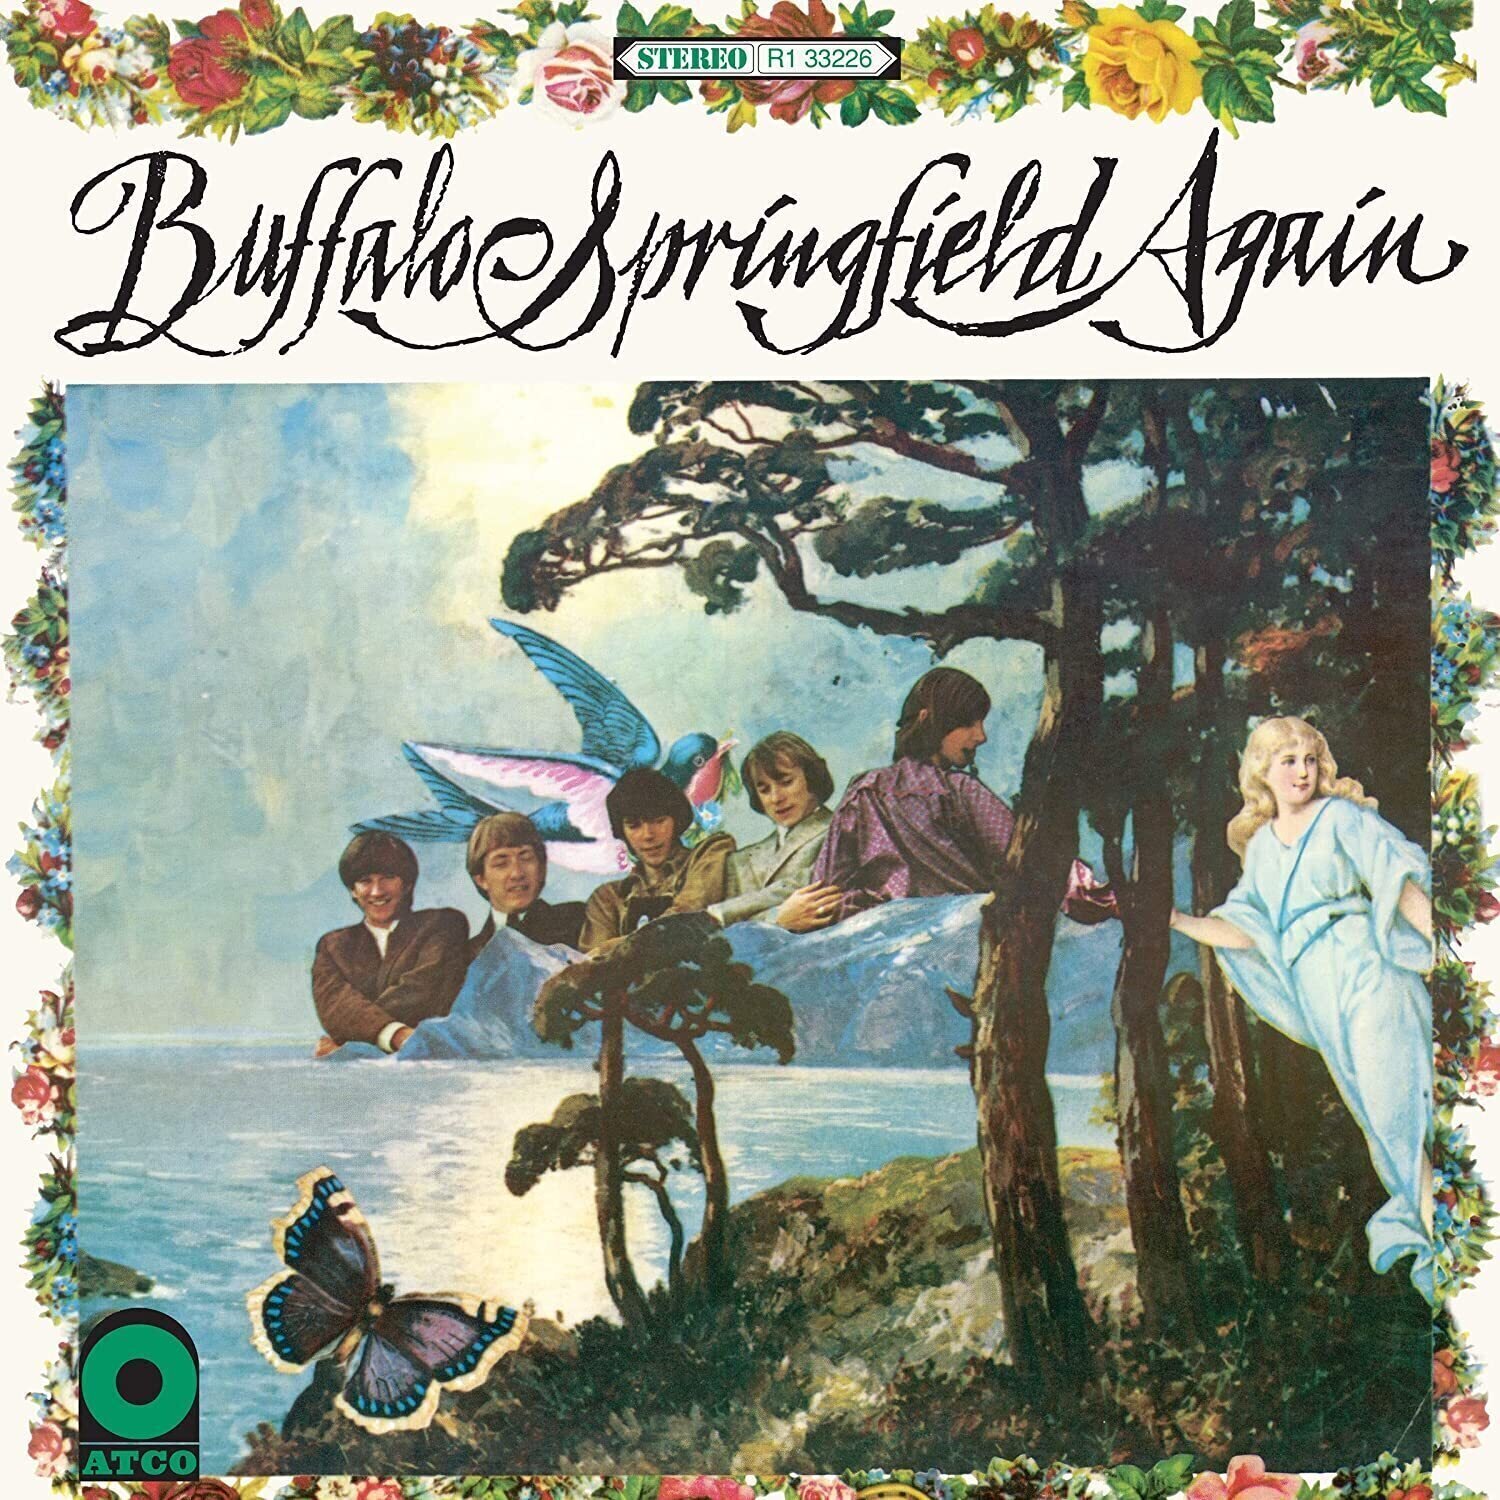 Vinyl Record Buffalo Springfield - Buffalo Springfield Again (LP)